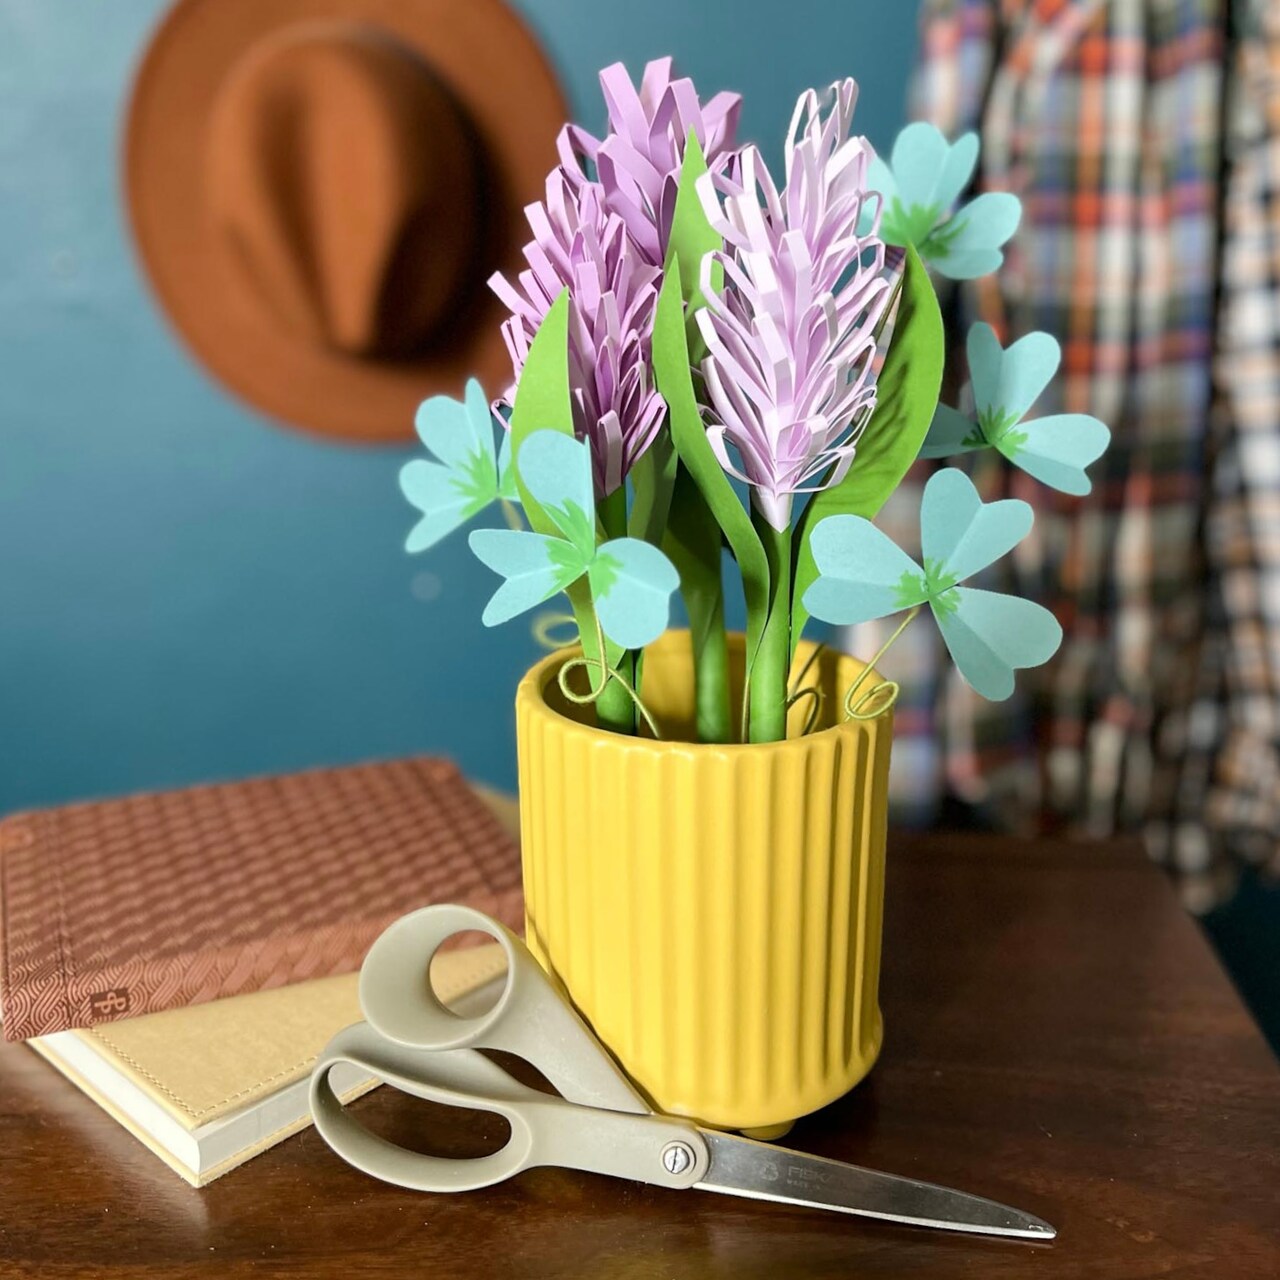 Paper Hyacinth Clover Bouquet with @craftylumberjacks